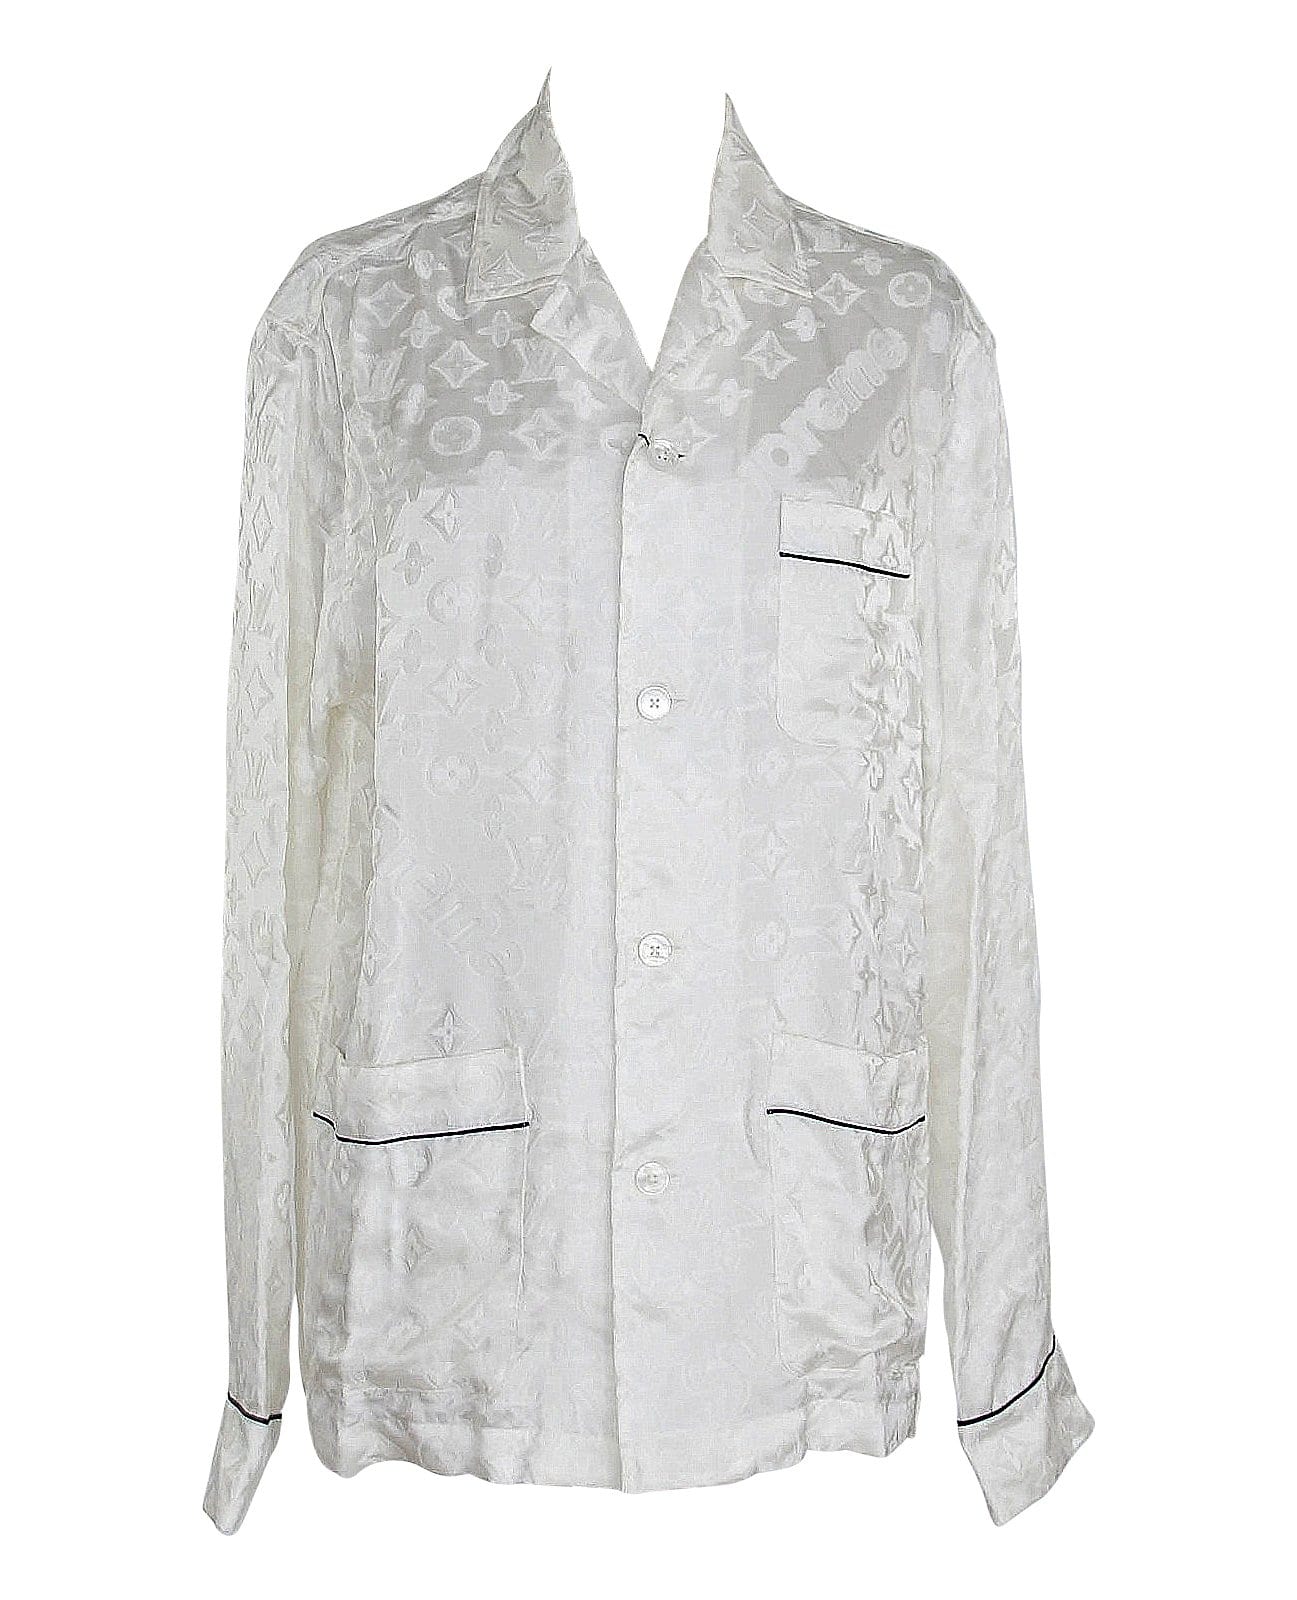 Louis Vuitton X Supreme Limited Edition White Pyjama Top M - mightychic